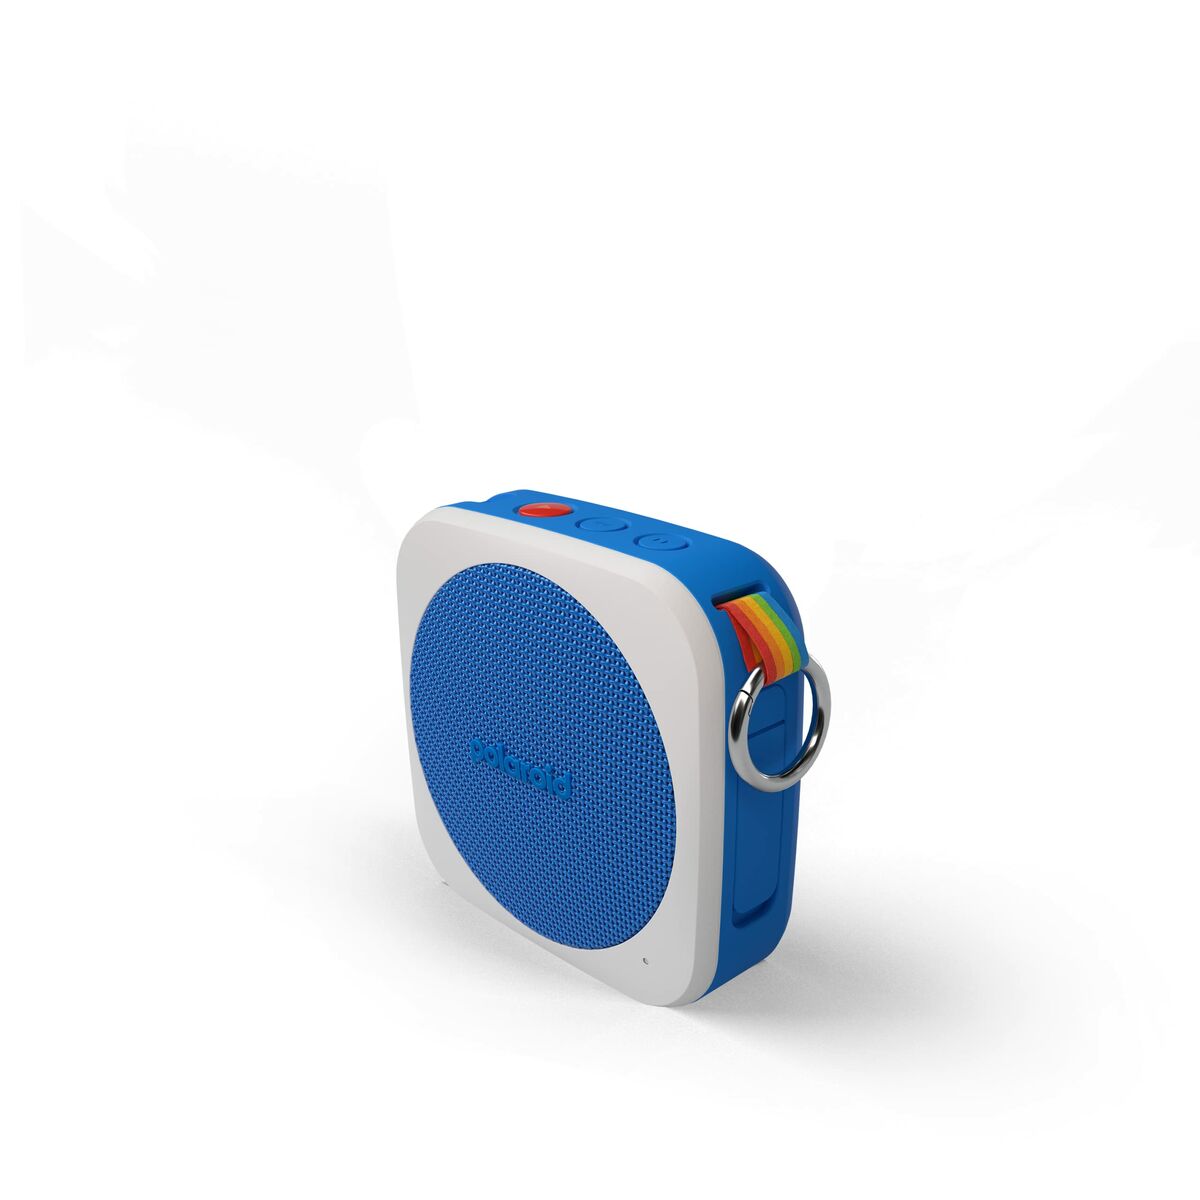 Tragbare Bluetooth-Lautsprecher Polaroid P1 ONE Blau